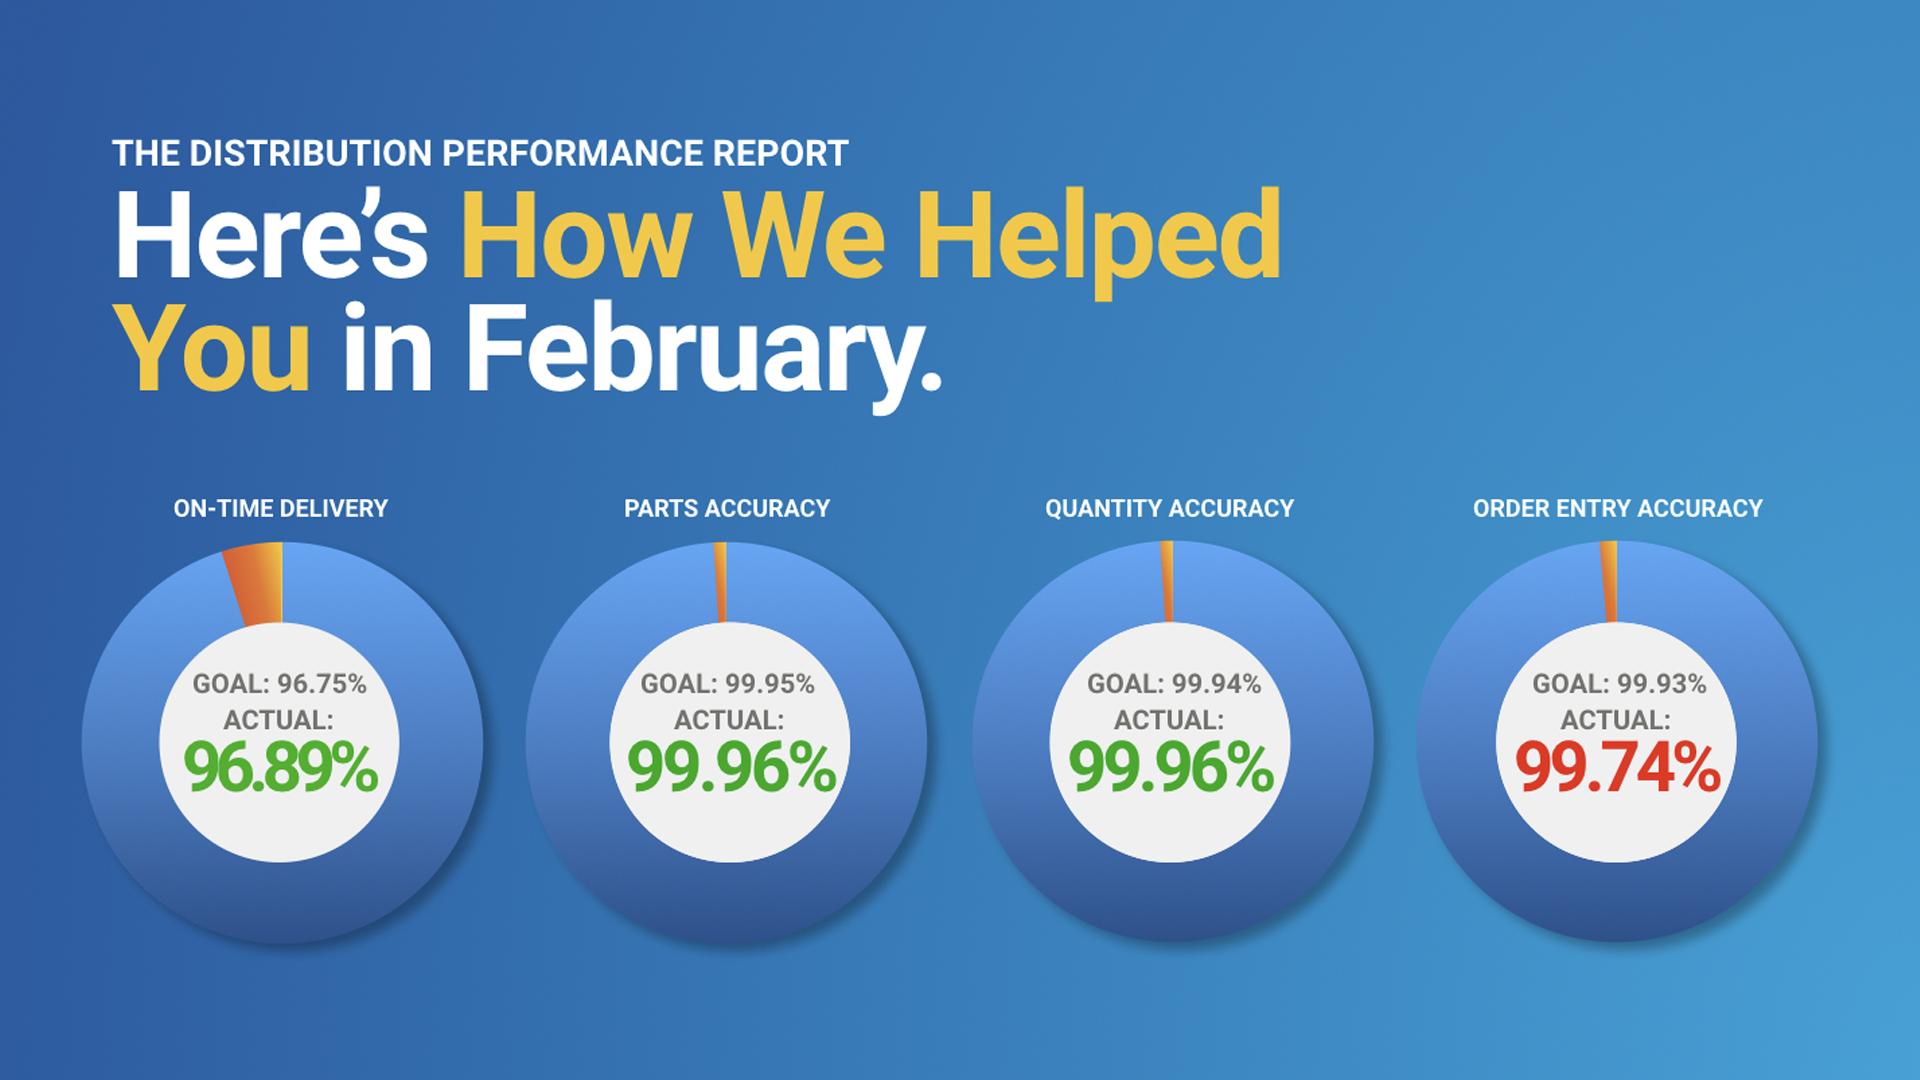 Earnest Machine's February Distribution Performance Report